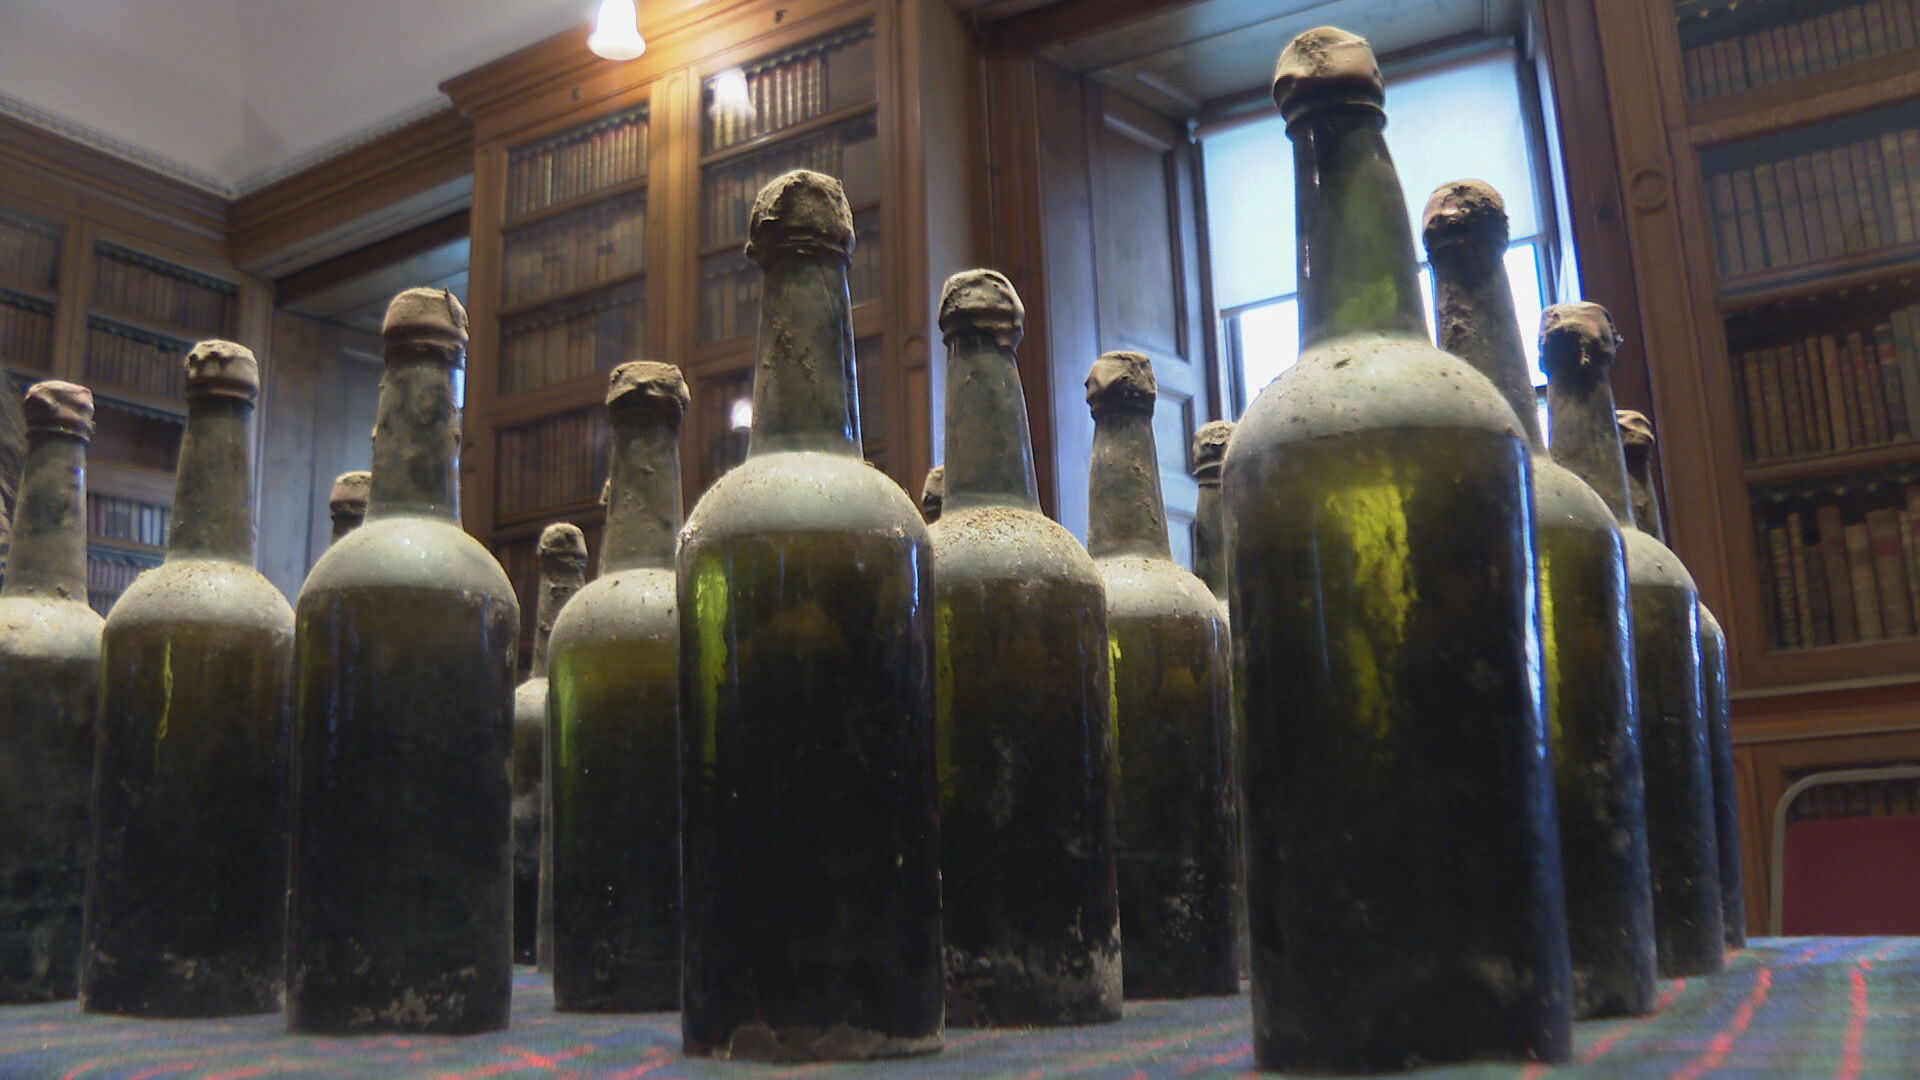 Oldest bottles of whisky ever discovered at Blair Castle